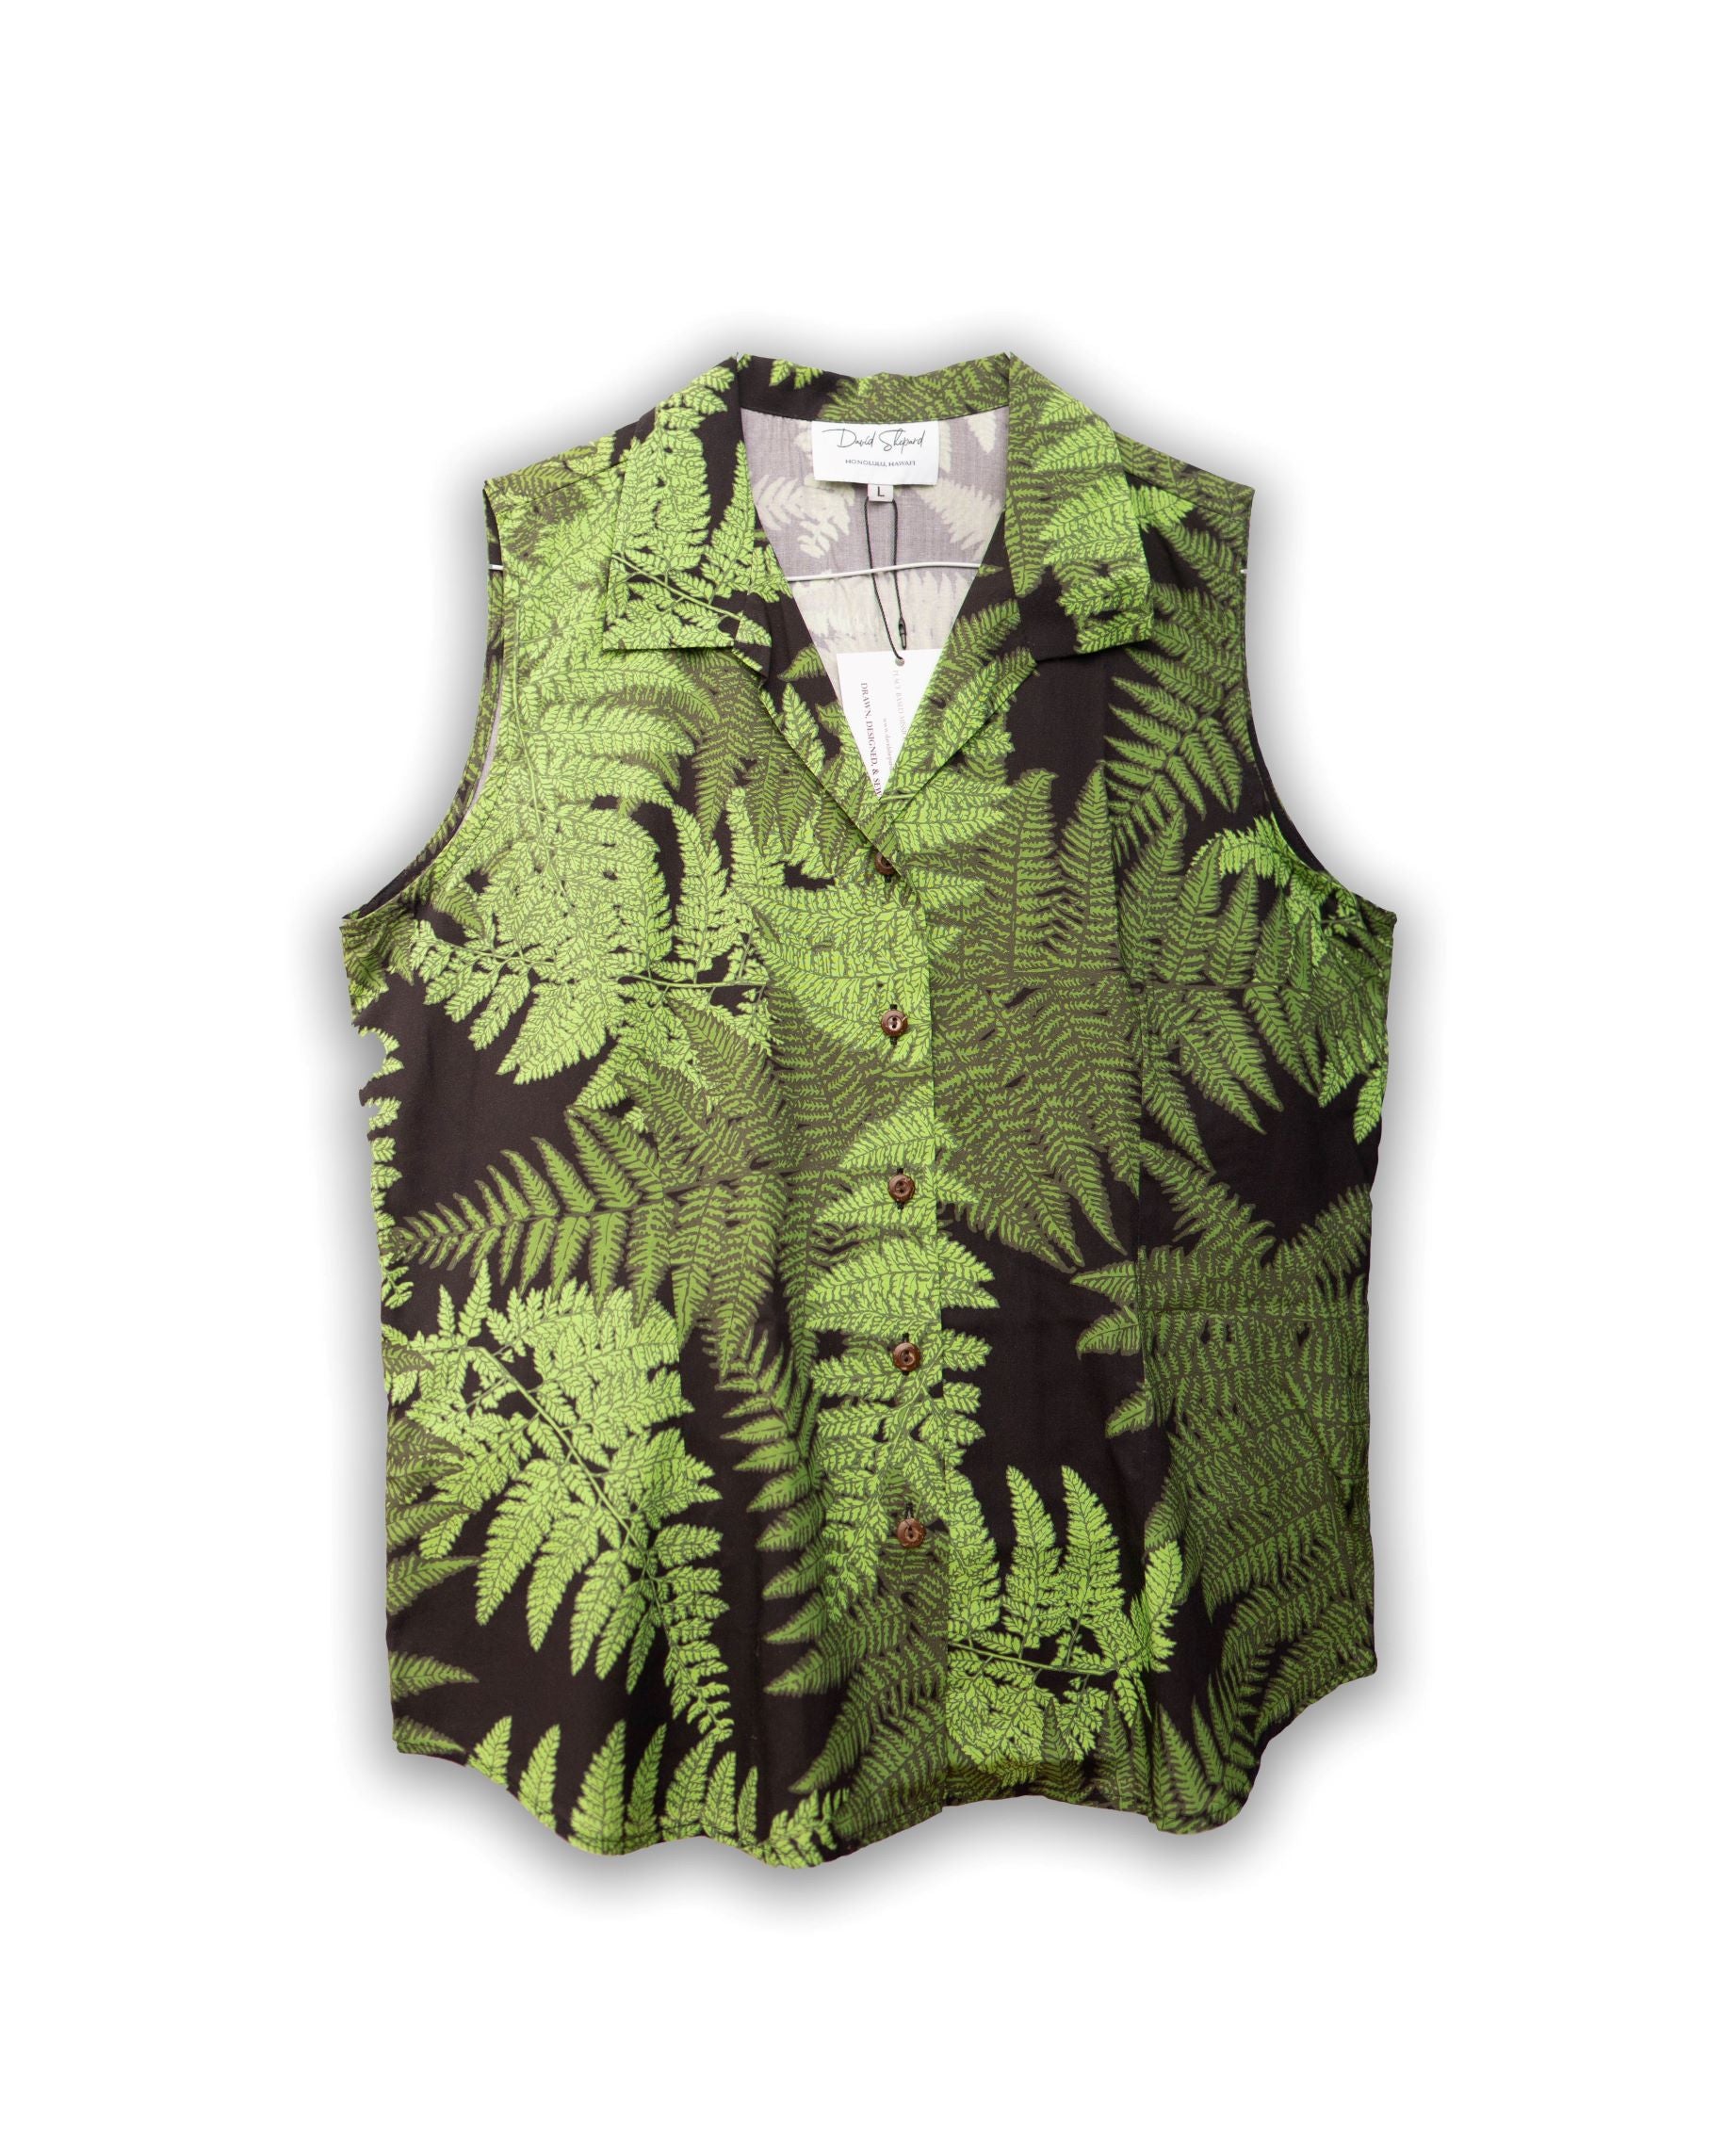 Pop-Up Mākeke - David Shepard Hawaii - Palapalai Fern Green Sleeveless Women's Aloha Shirt - Front View